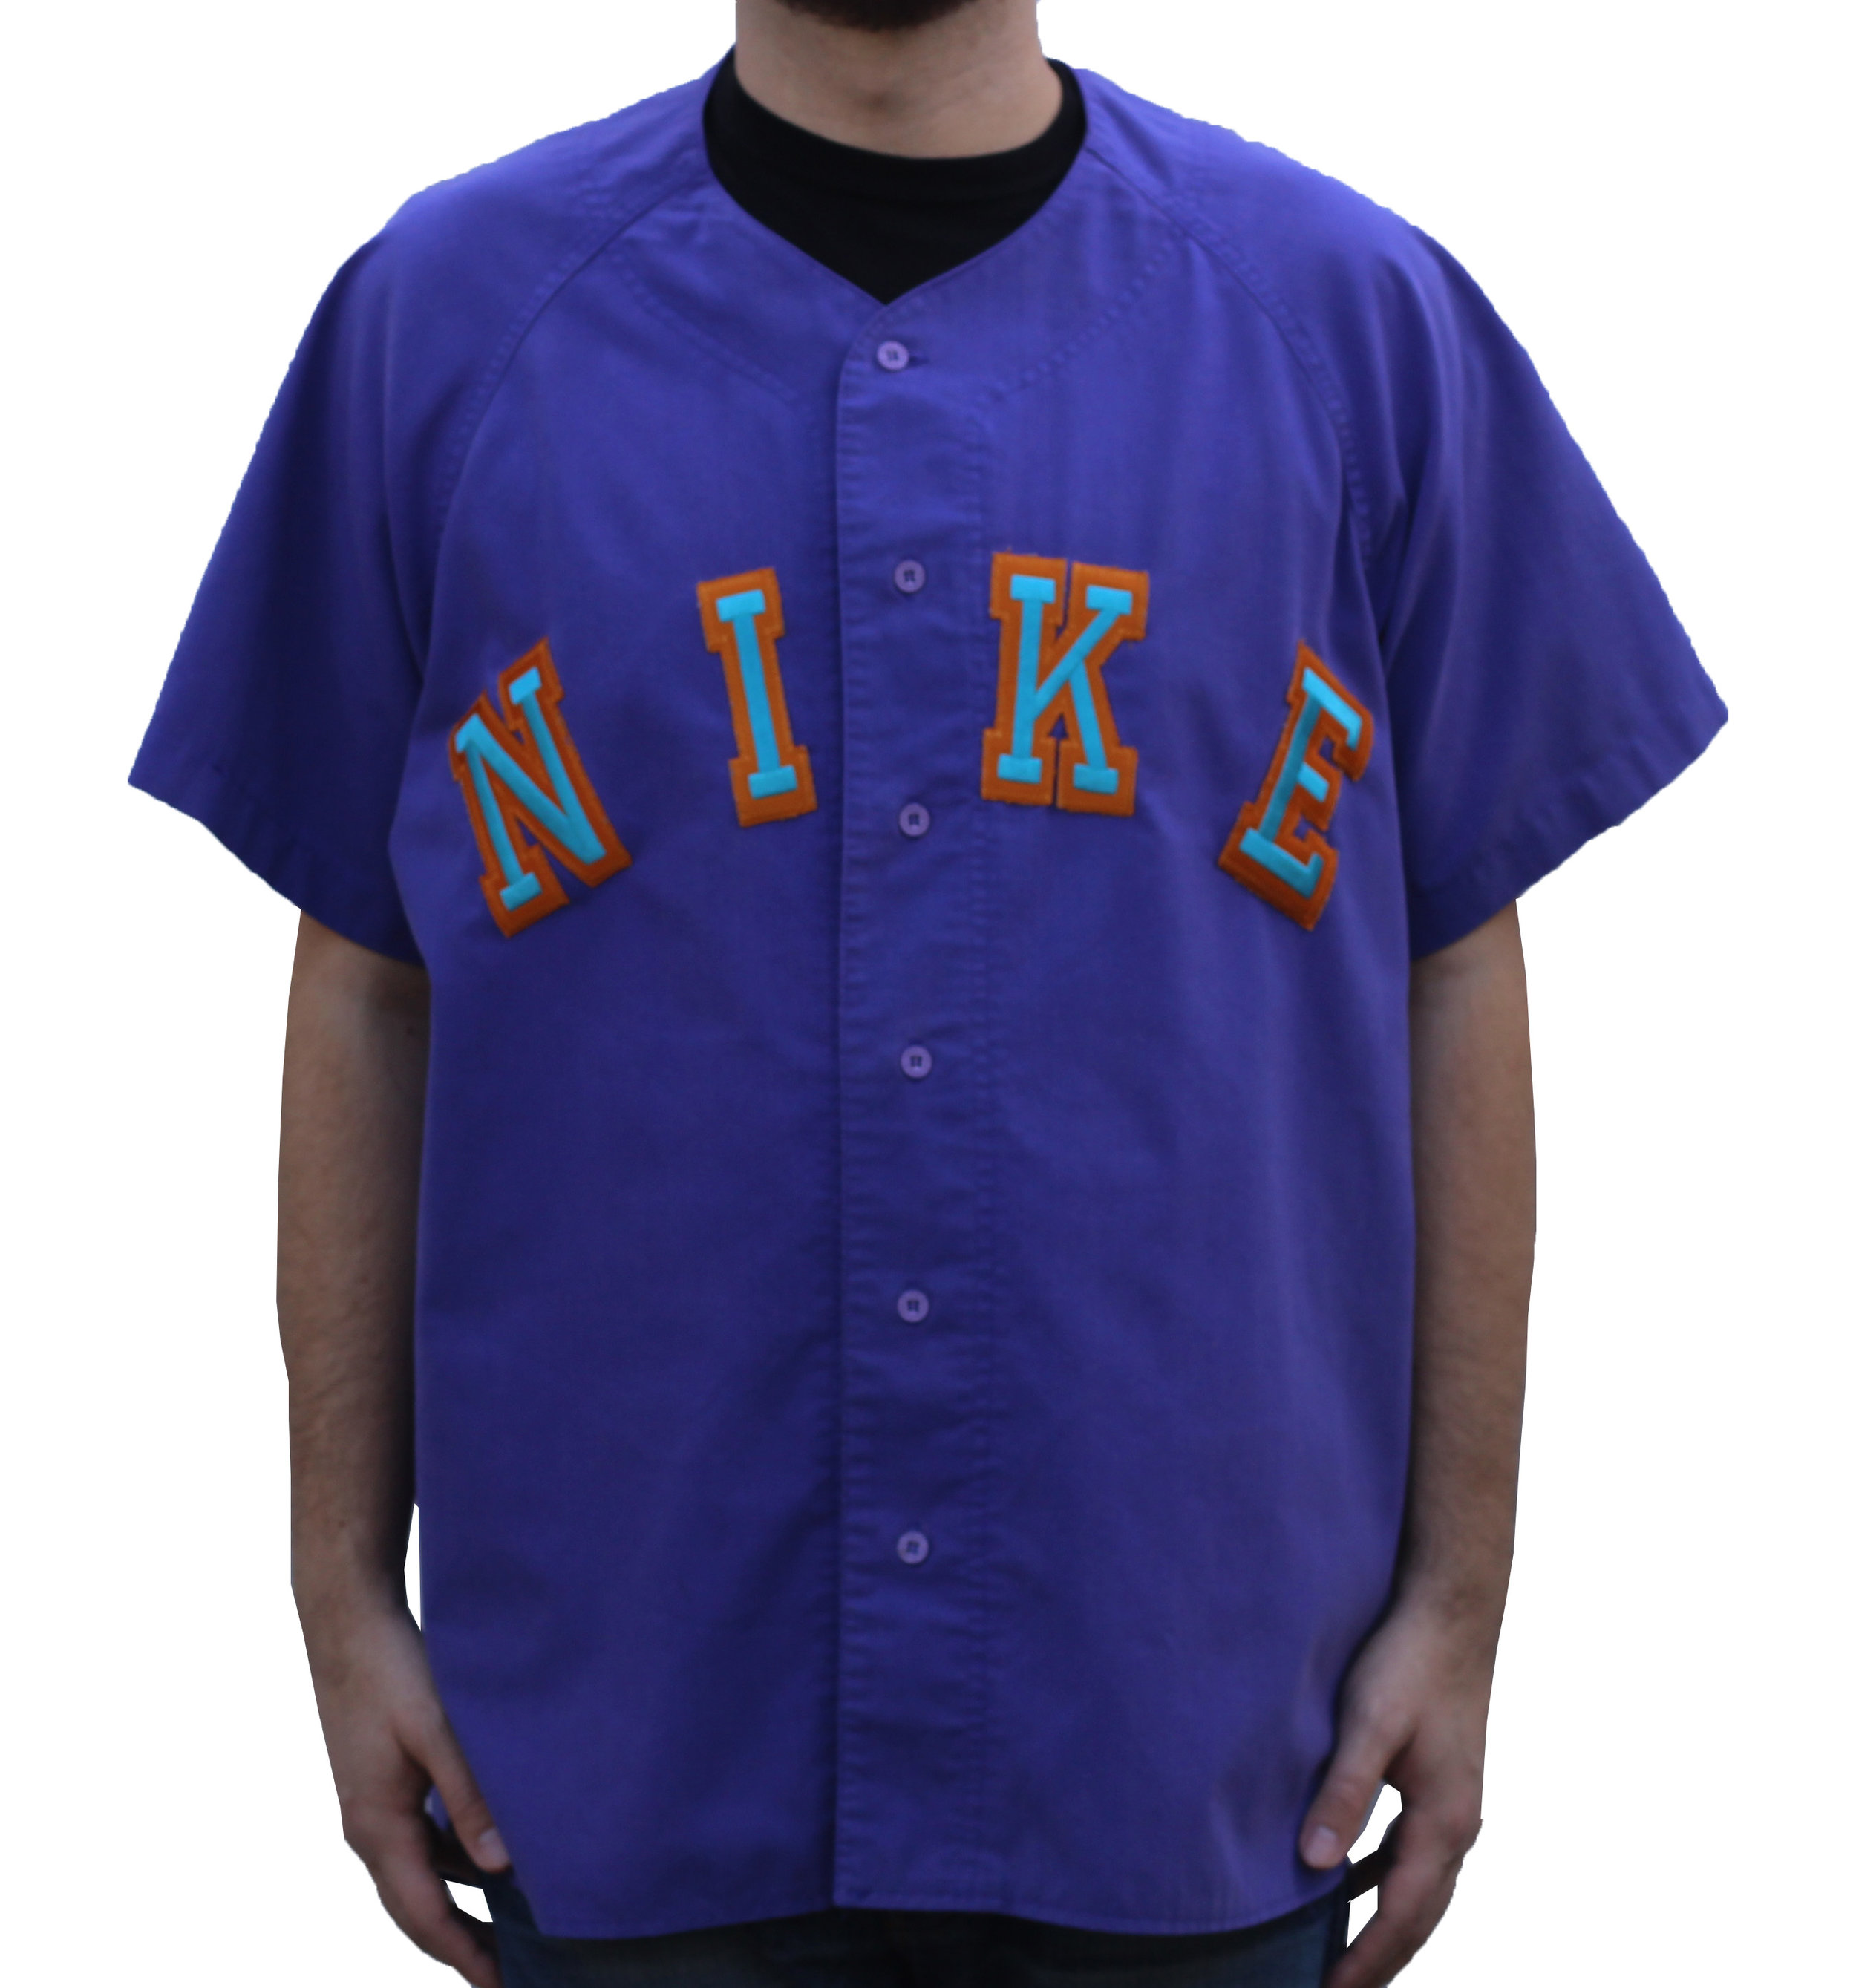 90s baseball shirt